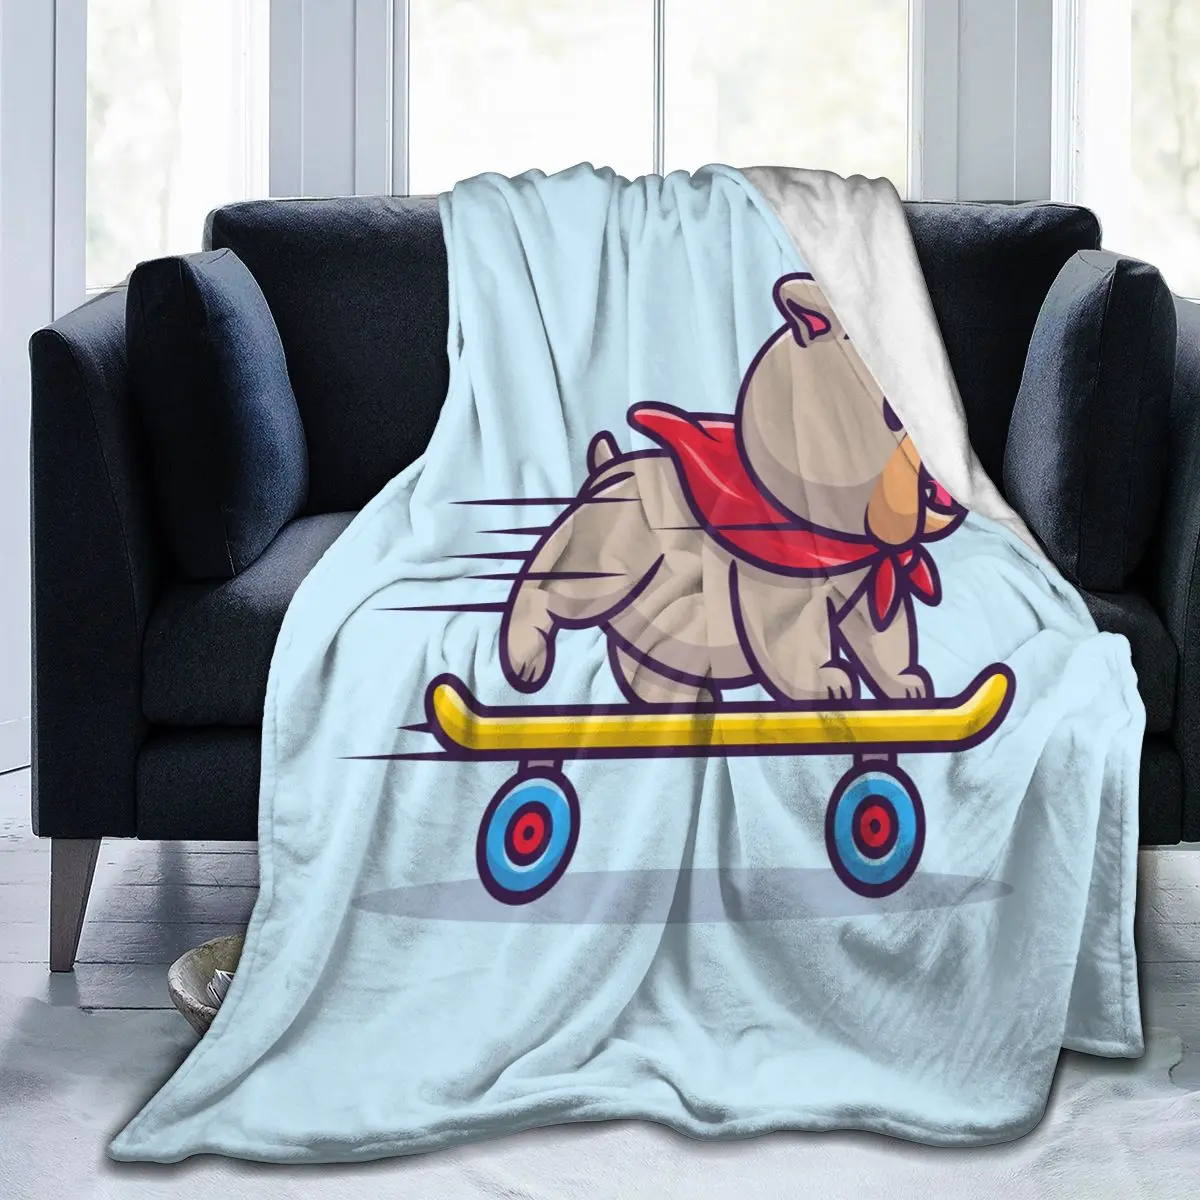 

Фланелевое Одеяло Bulldog скейтборд для игр ультра-Мягкое микро Флисовое одеяло для халата, дивана, кровати, путешествий, дома, зима, весна, осен...